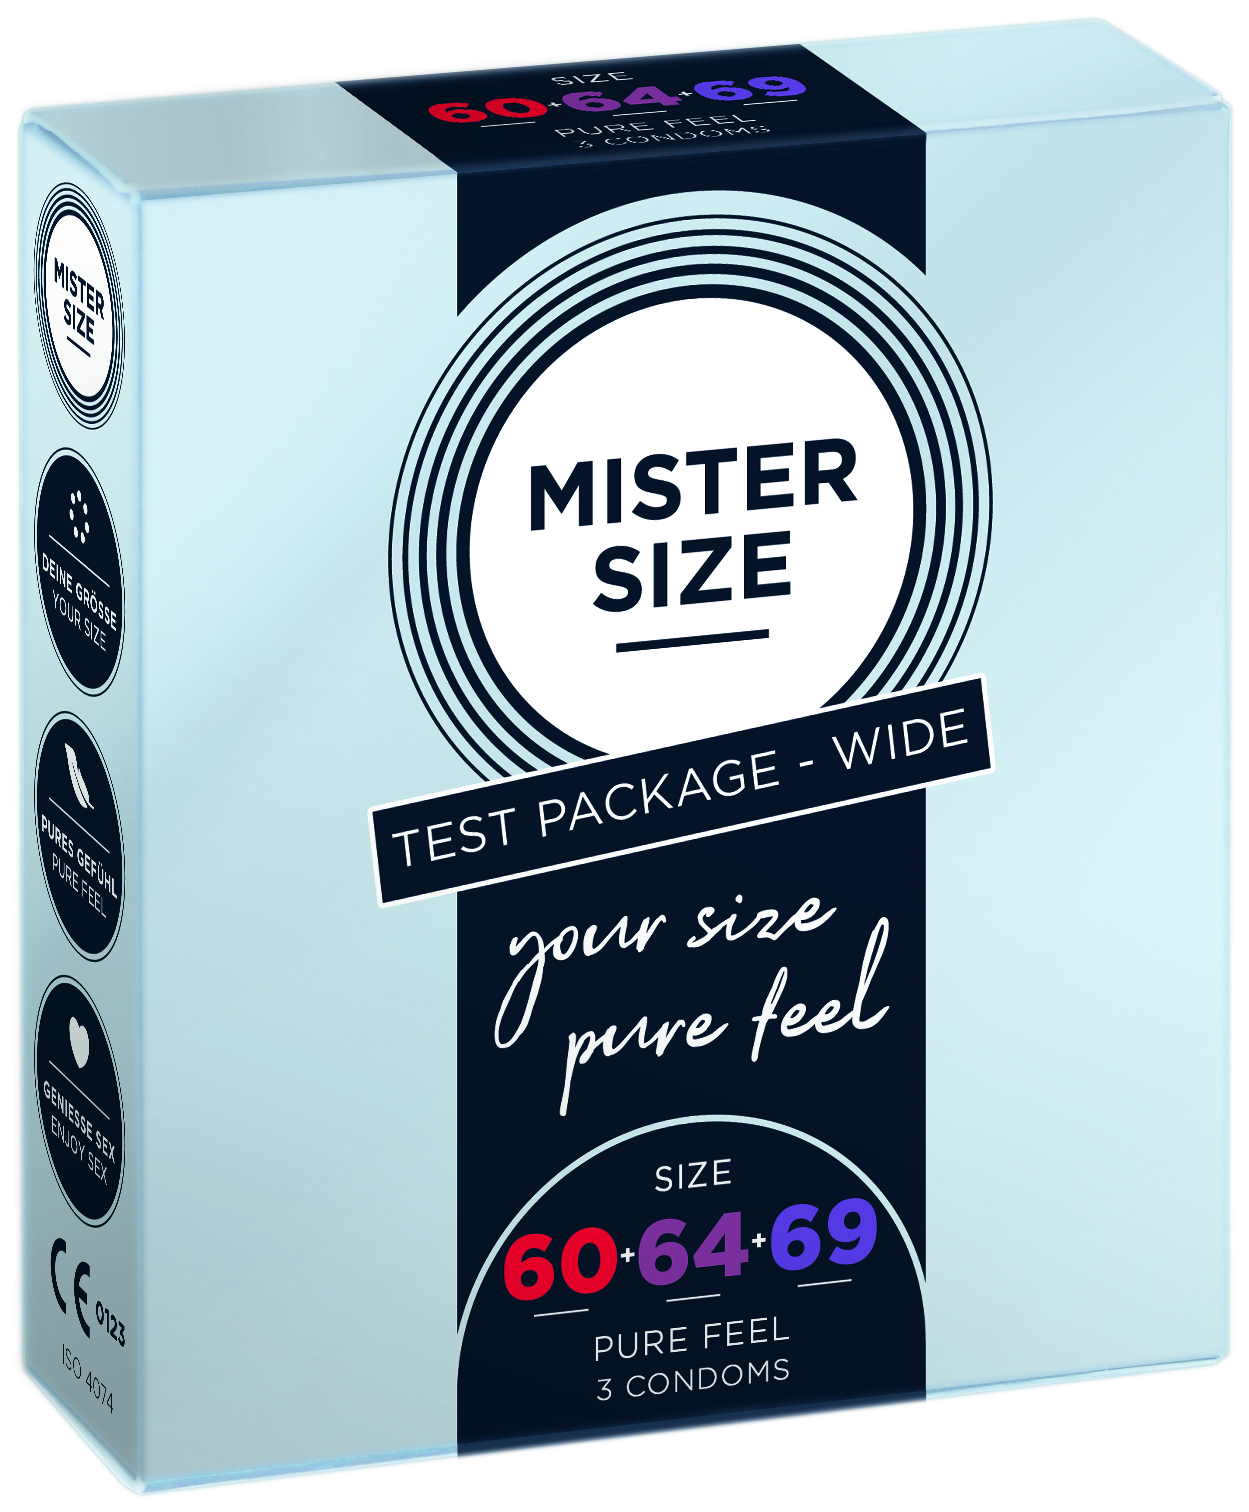 Mister Size Test Pack 60-64-69